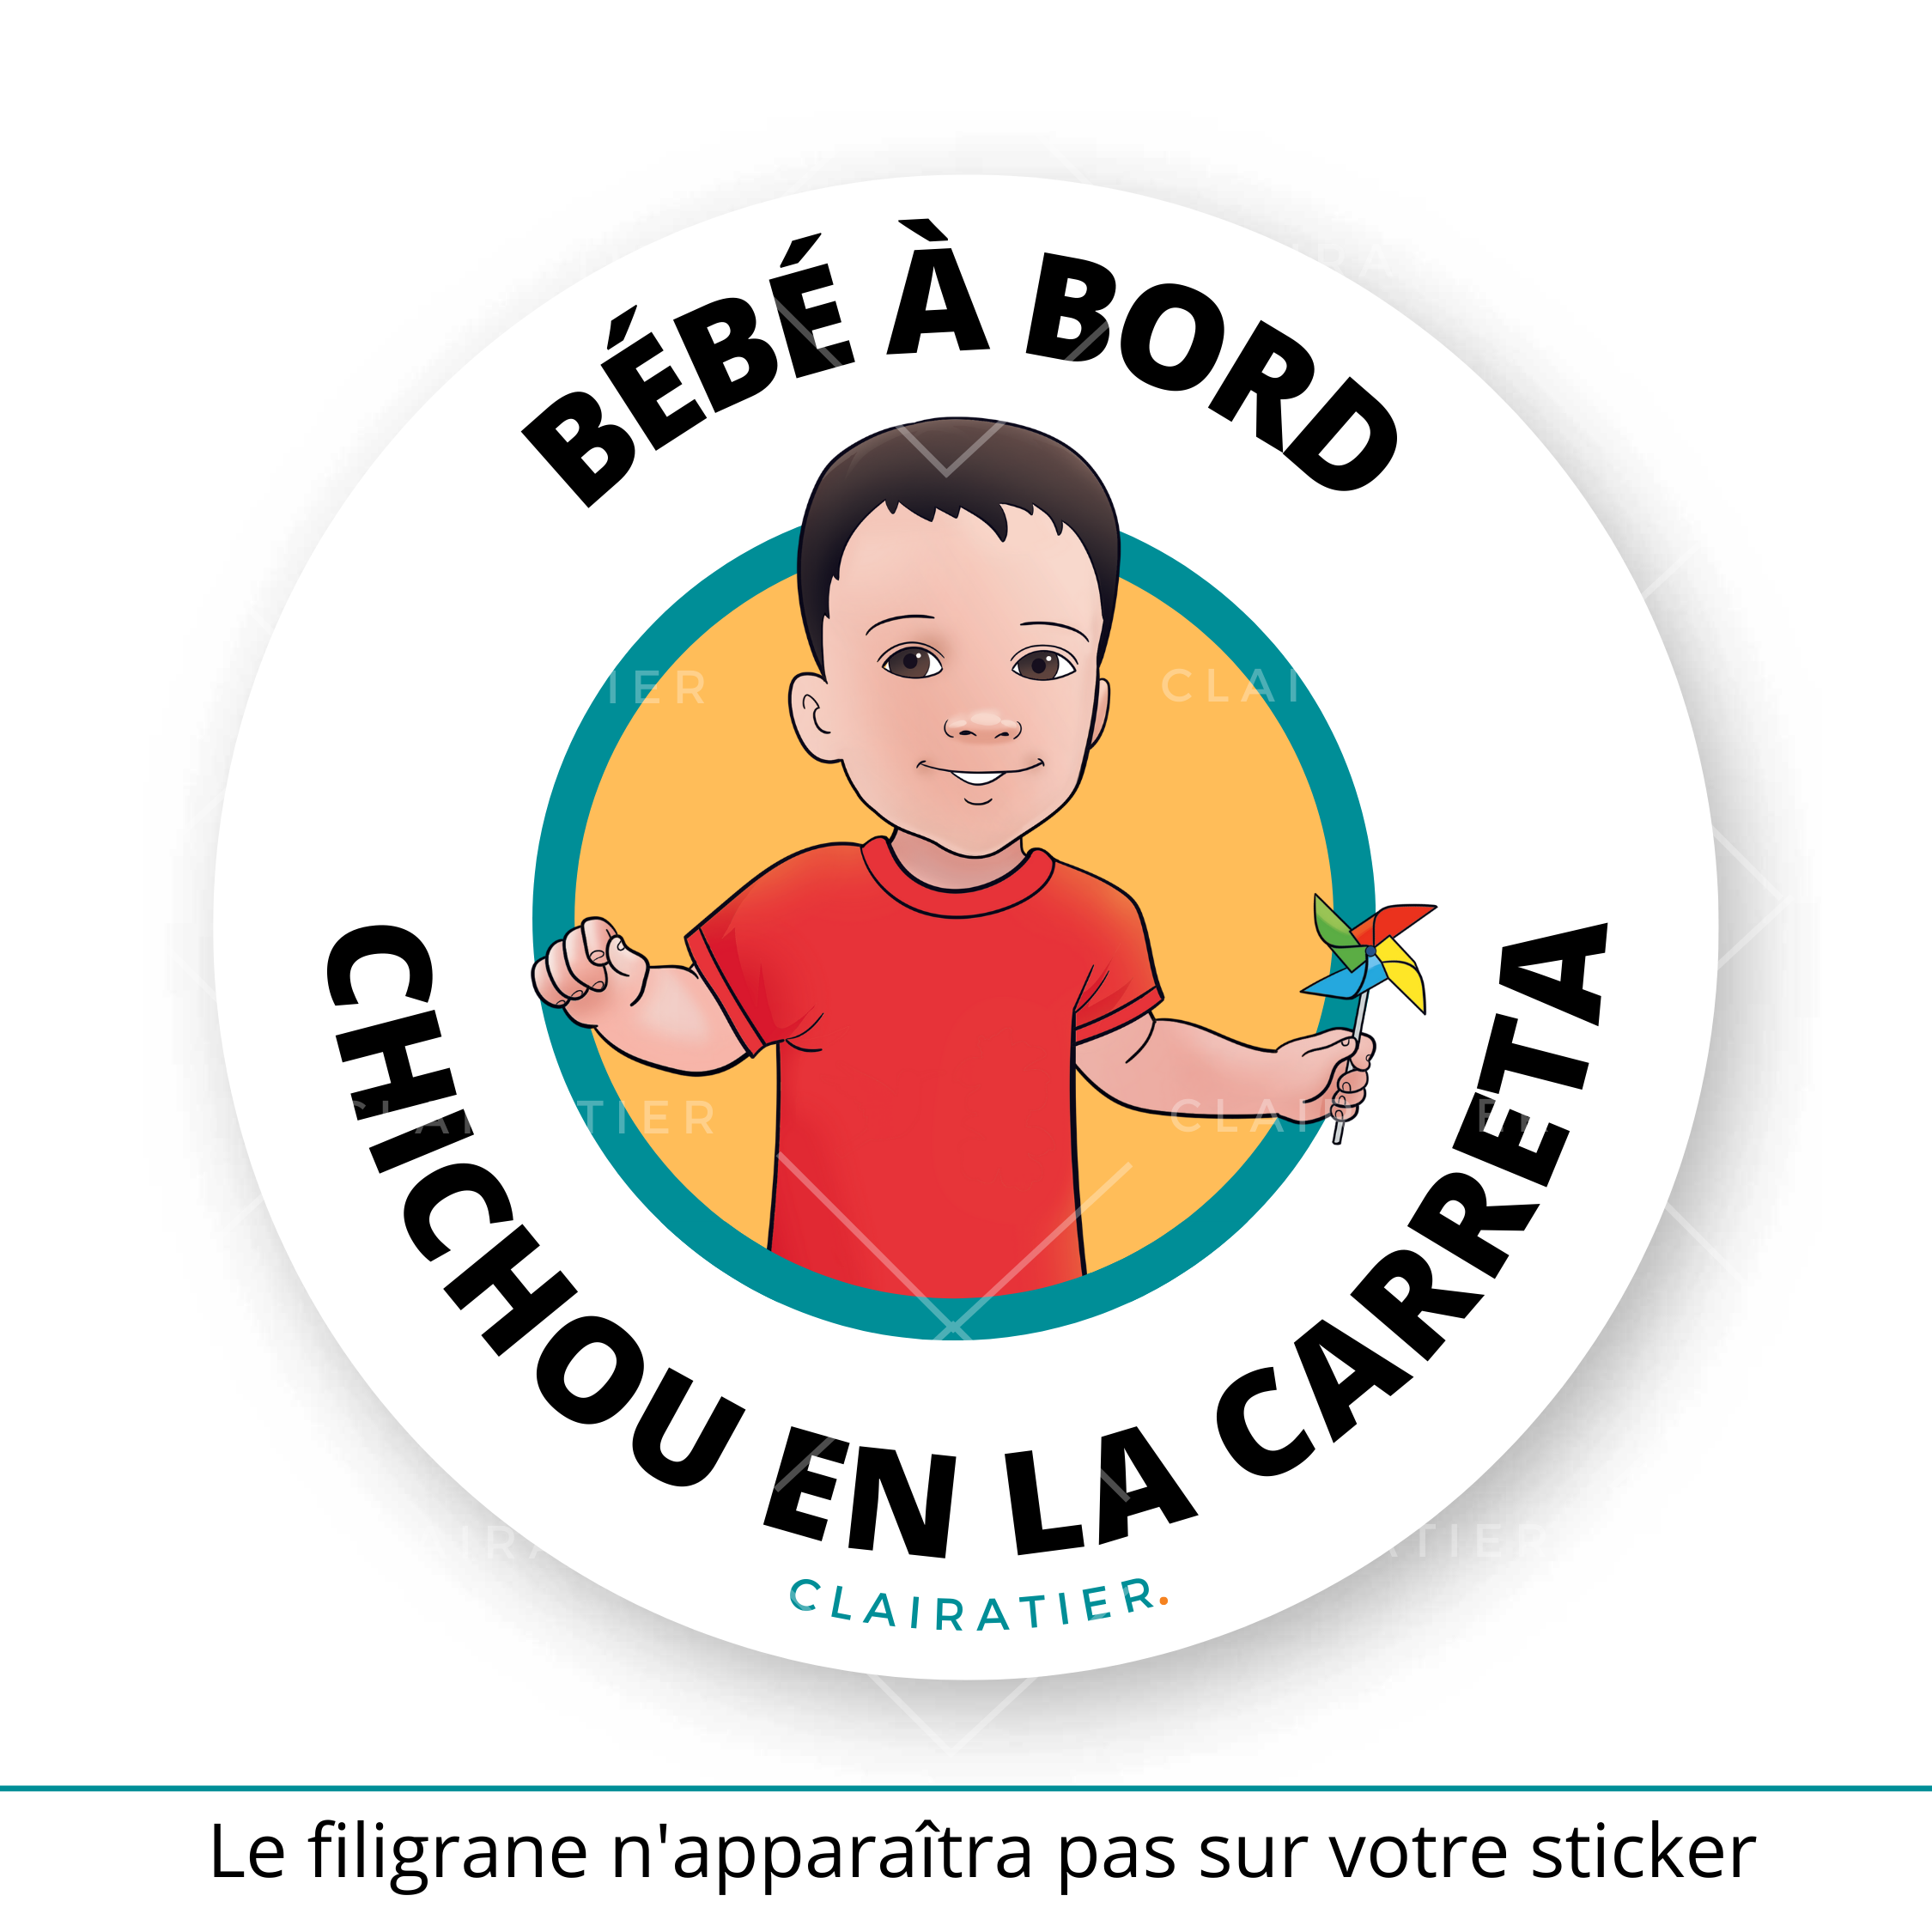 Clairabord - Garçons - Sticker voiture bébé à bord – Clairatier